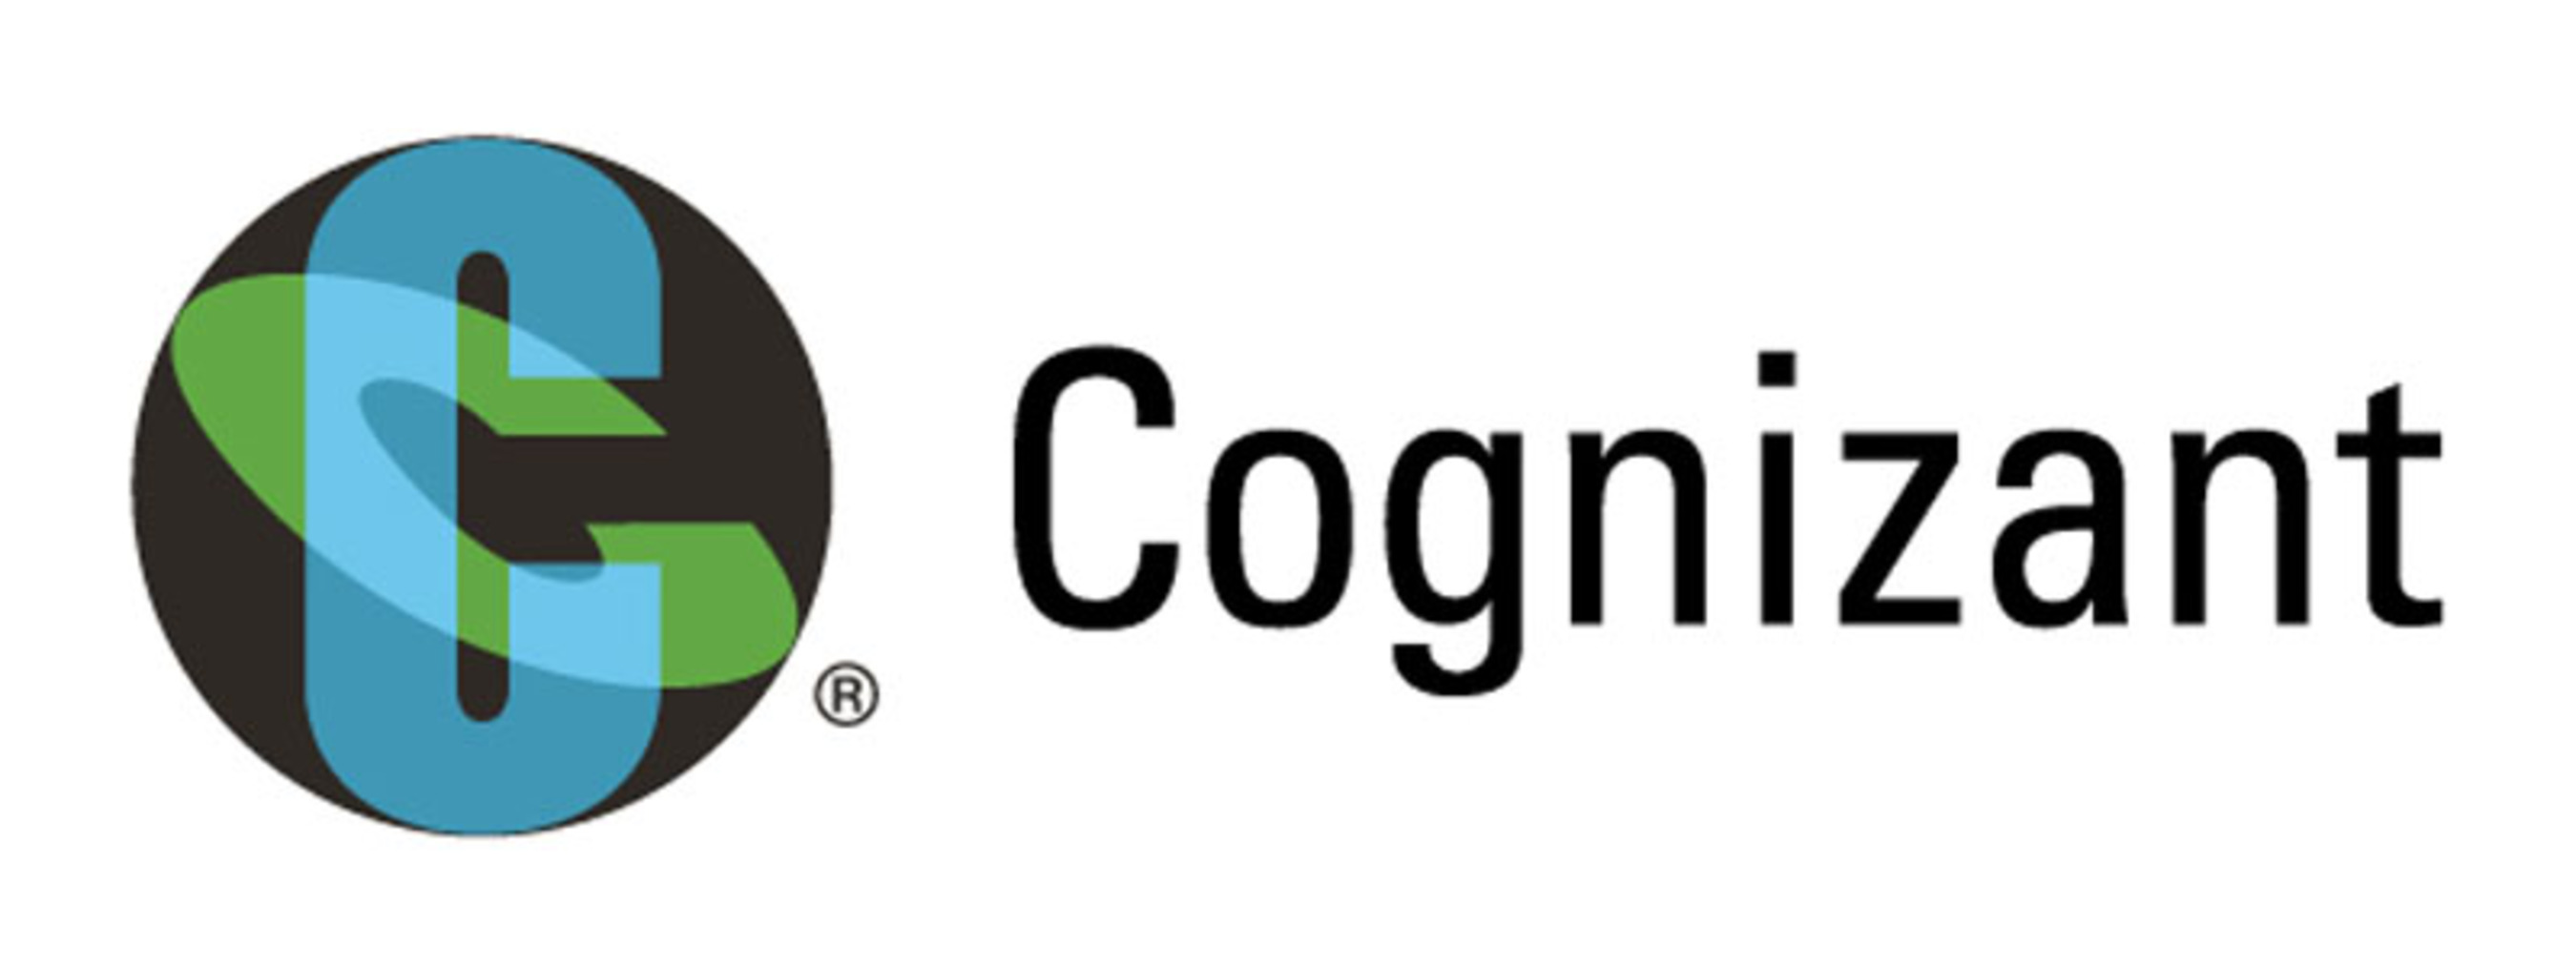 Cognizant Logo. (PRNewsFoto/Cognizant) (PRNewsFoto/)